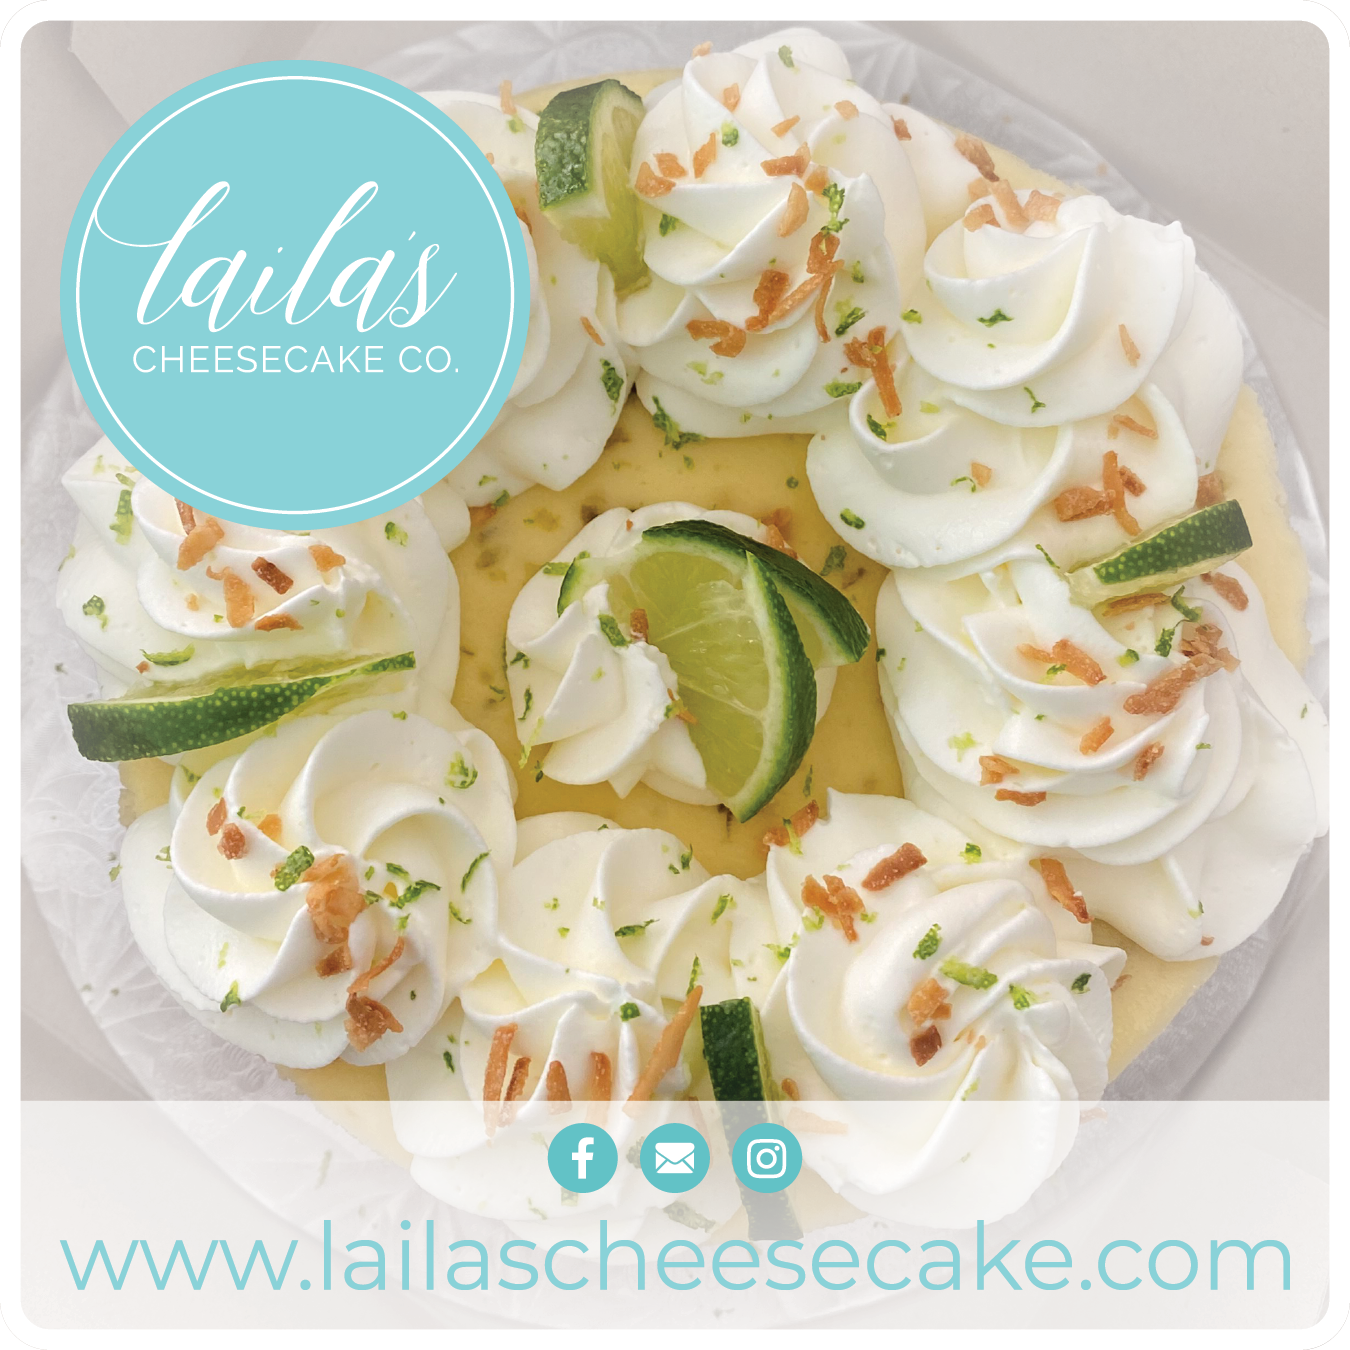 Laila's Cheesecake Co